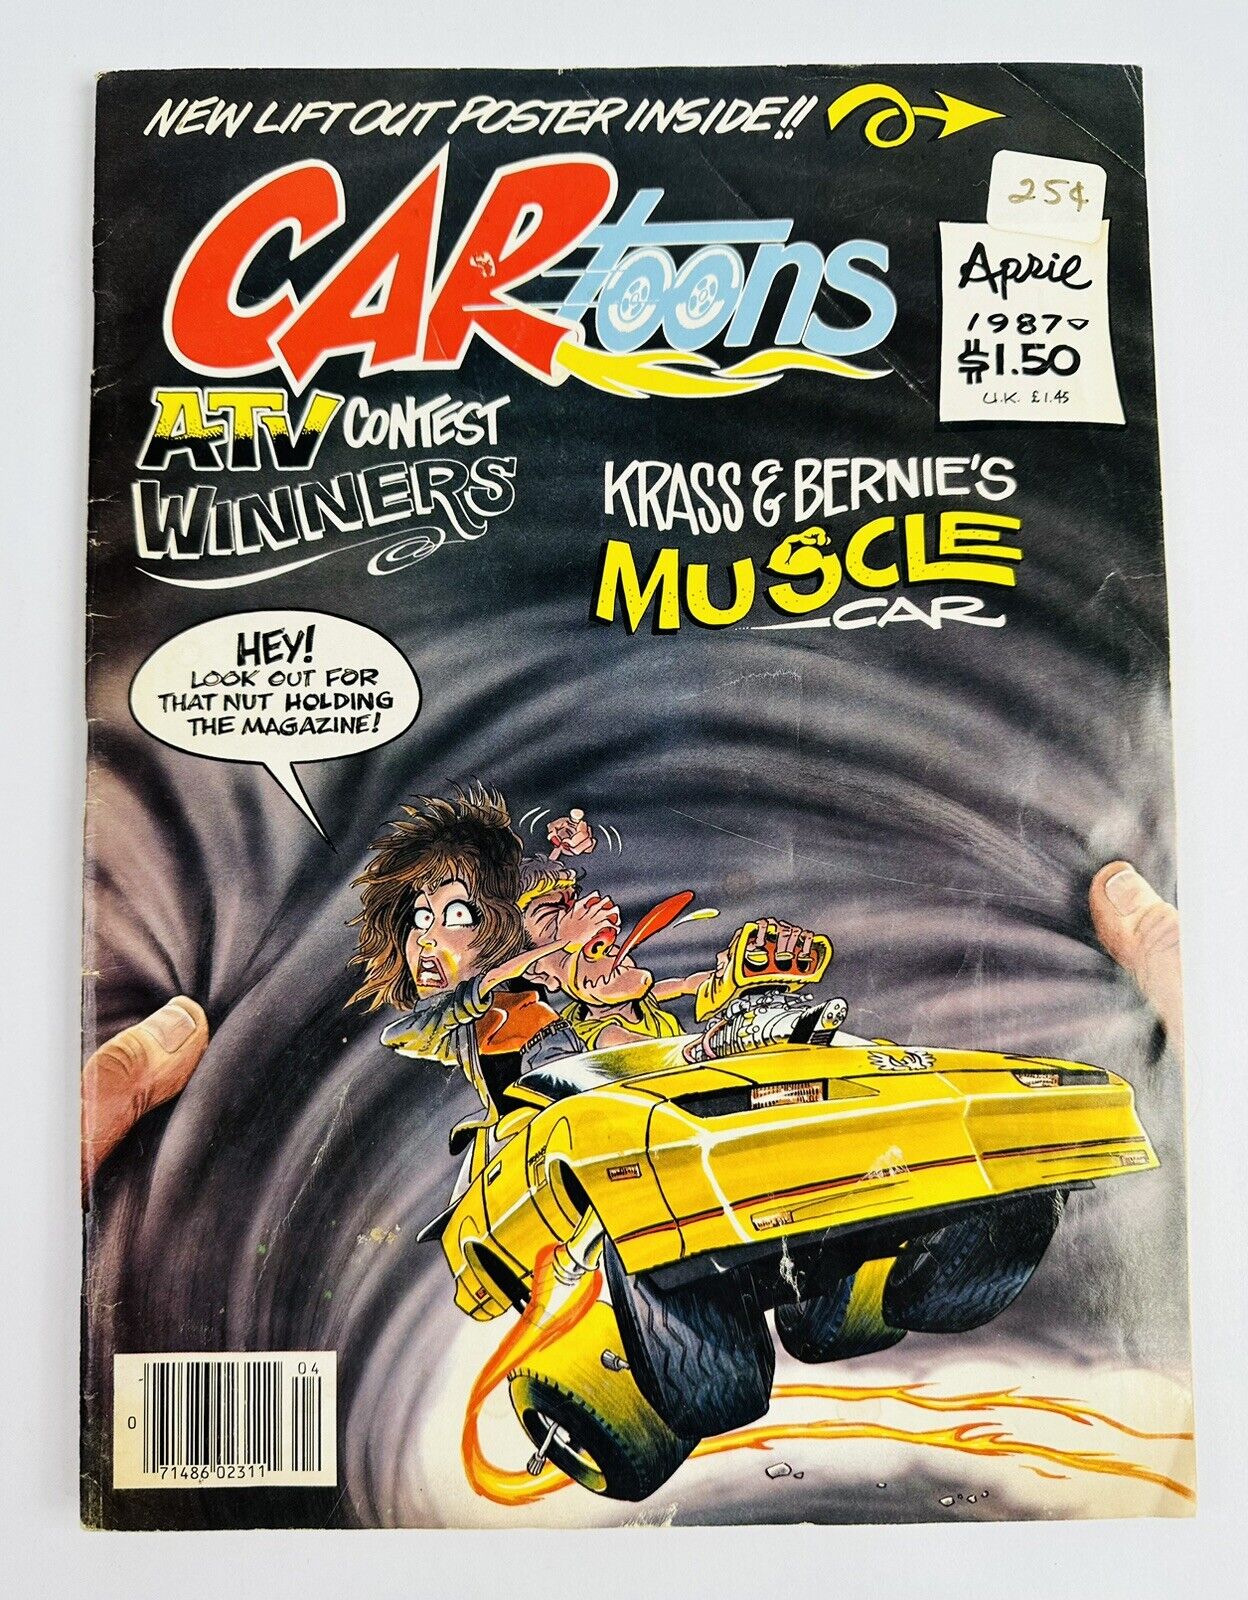 CAR Toons Magazine April 1987 w/Poster